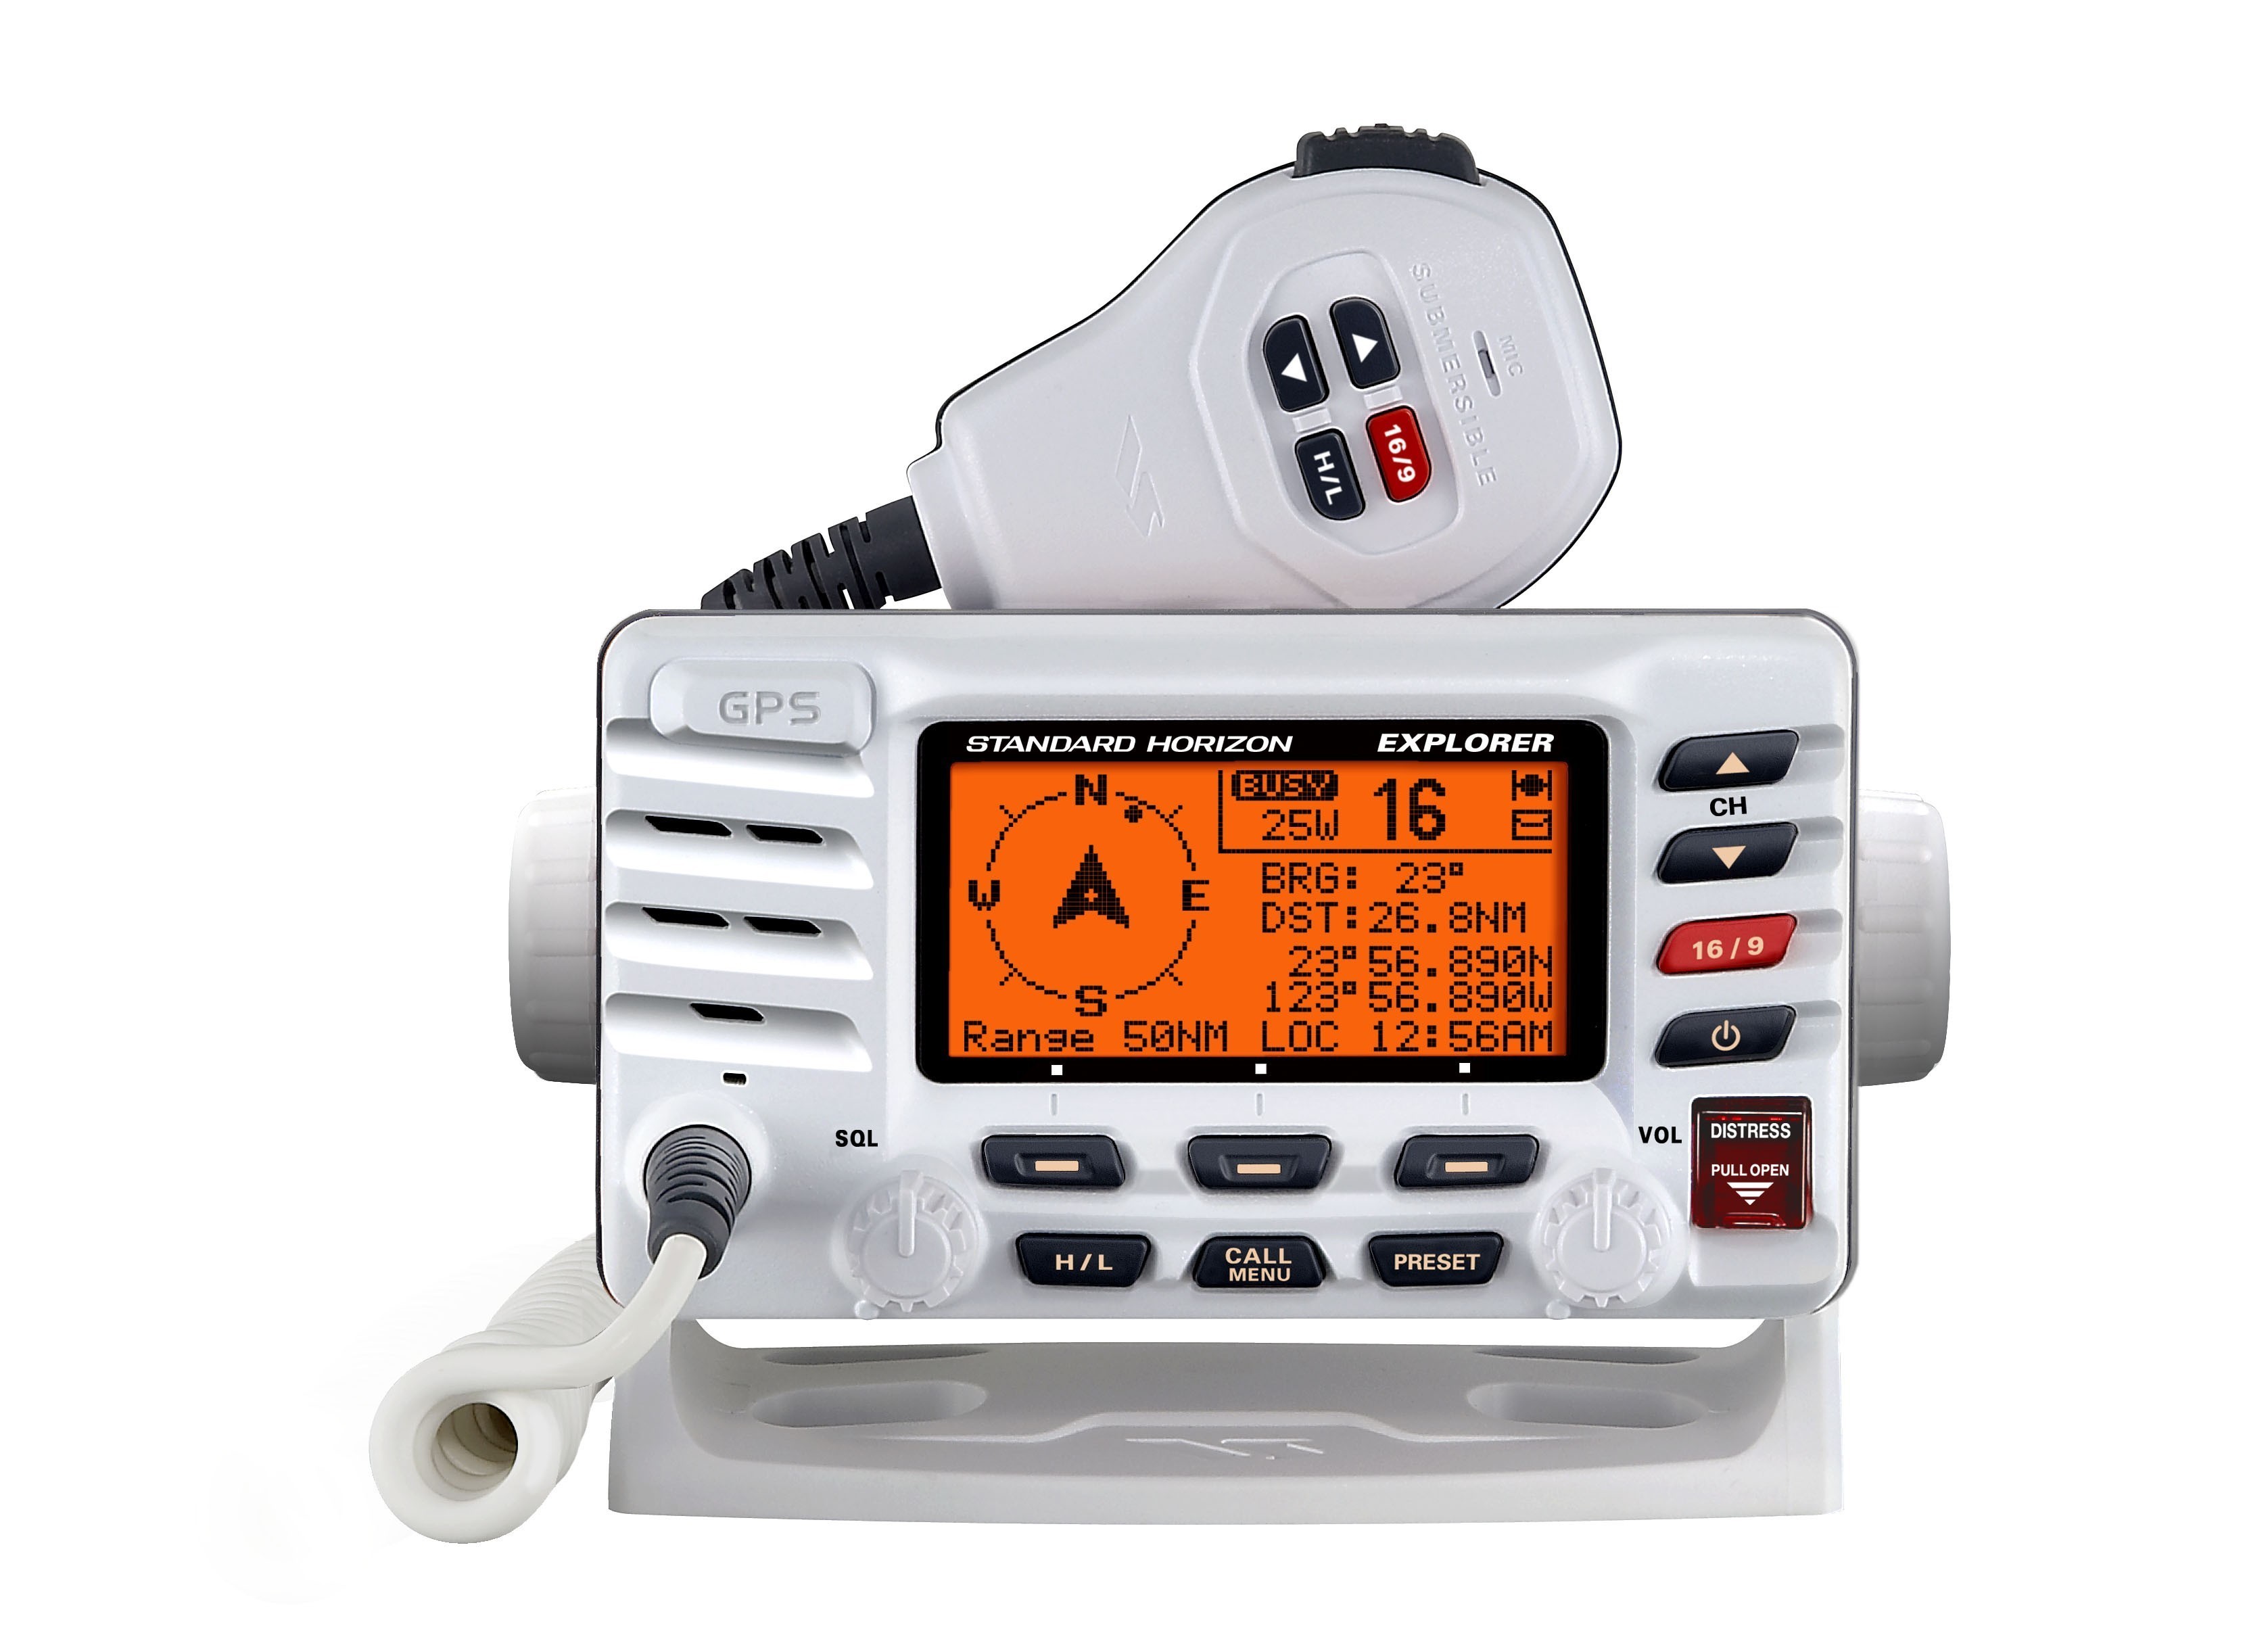 Standard Horizon GX1700W Explorer GPS VHF Radio, DSC, Scan - White